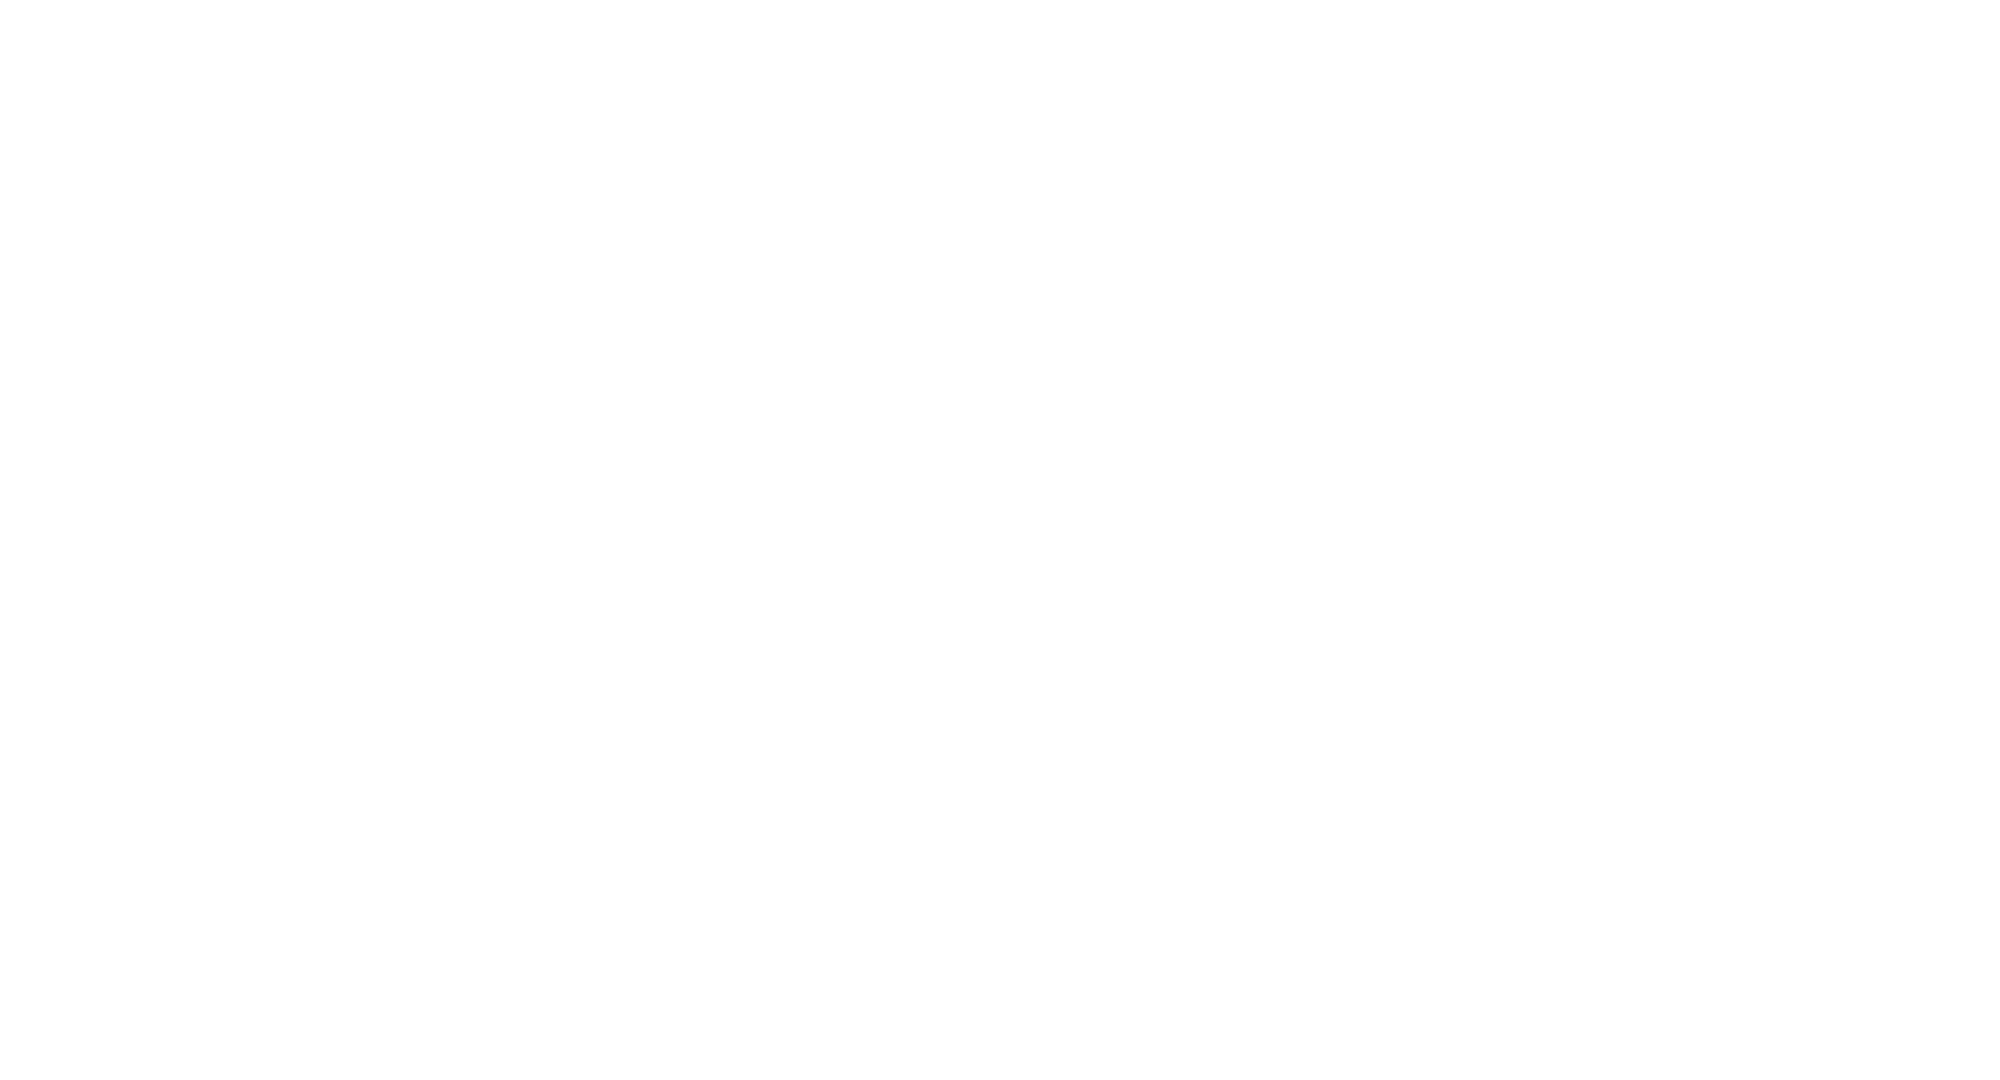 WordPress-logotype-alternative-white.png